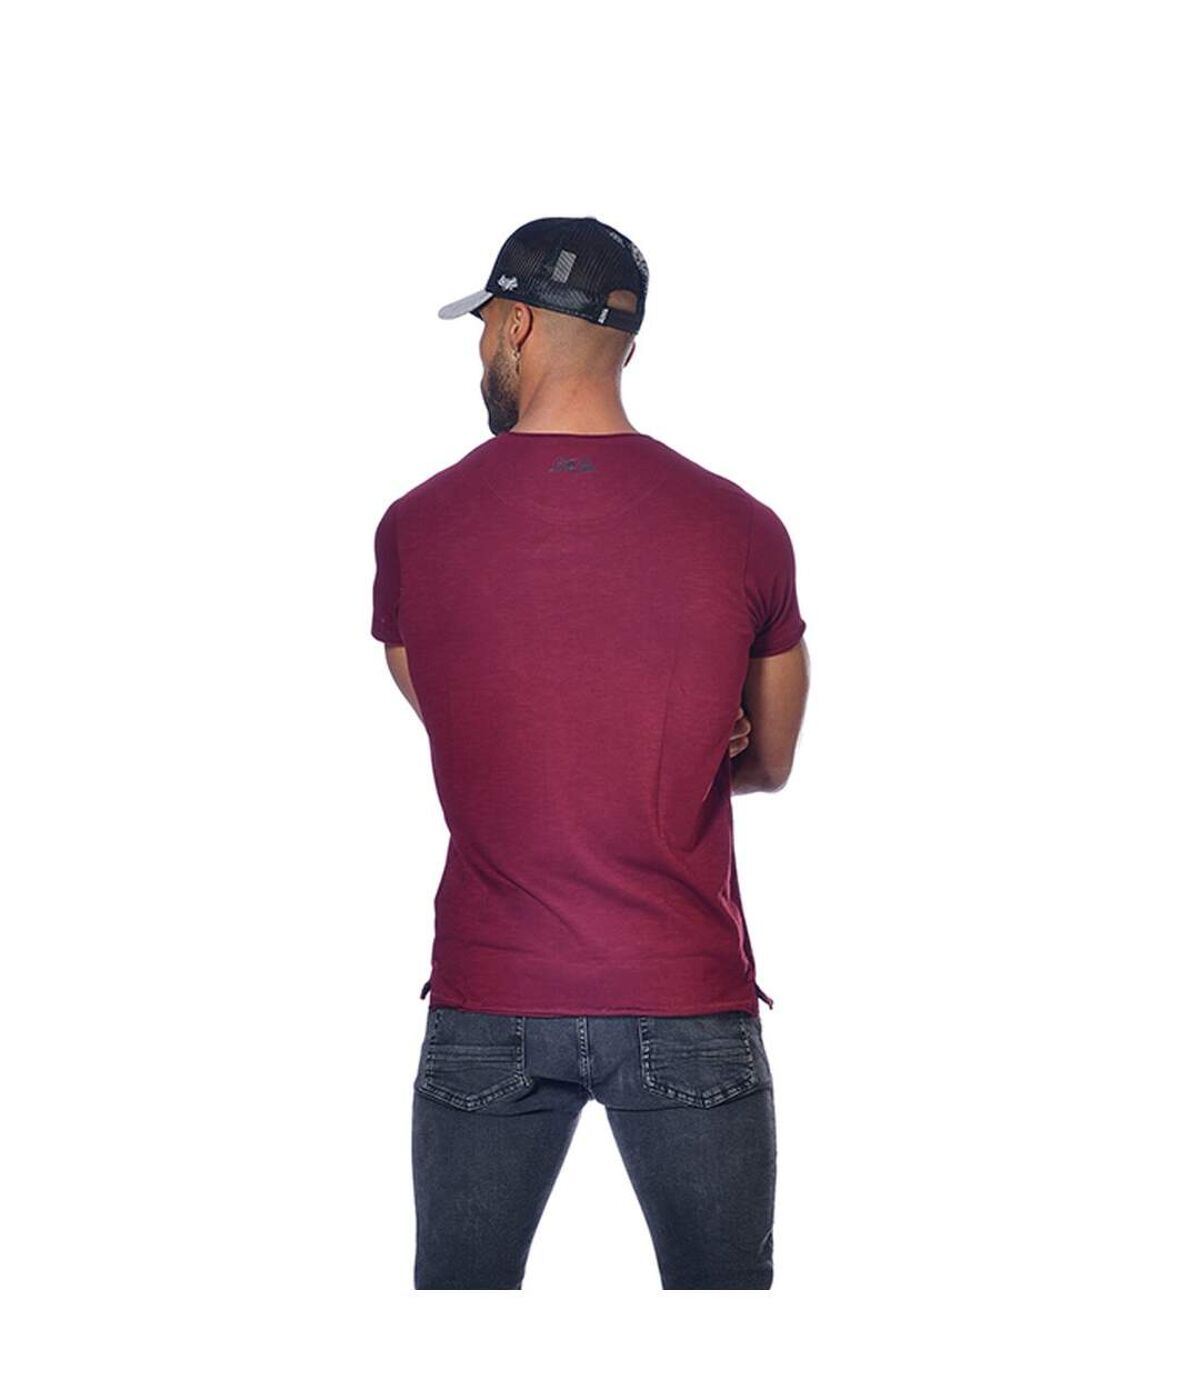 Tee Shirt Homme 100% Coton, T shirt Homme Regular, Respirant et Doux